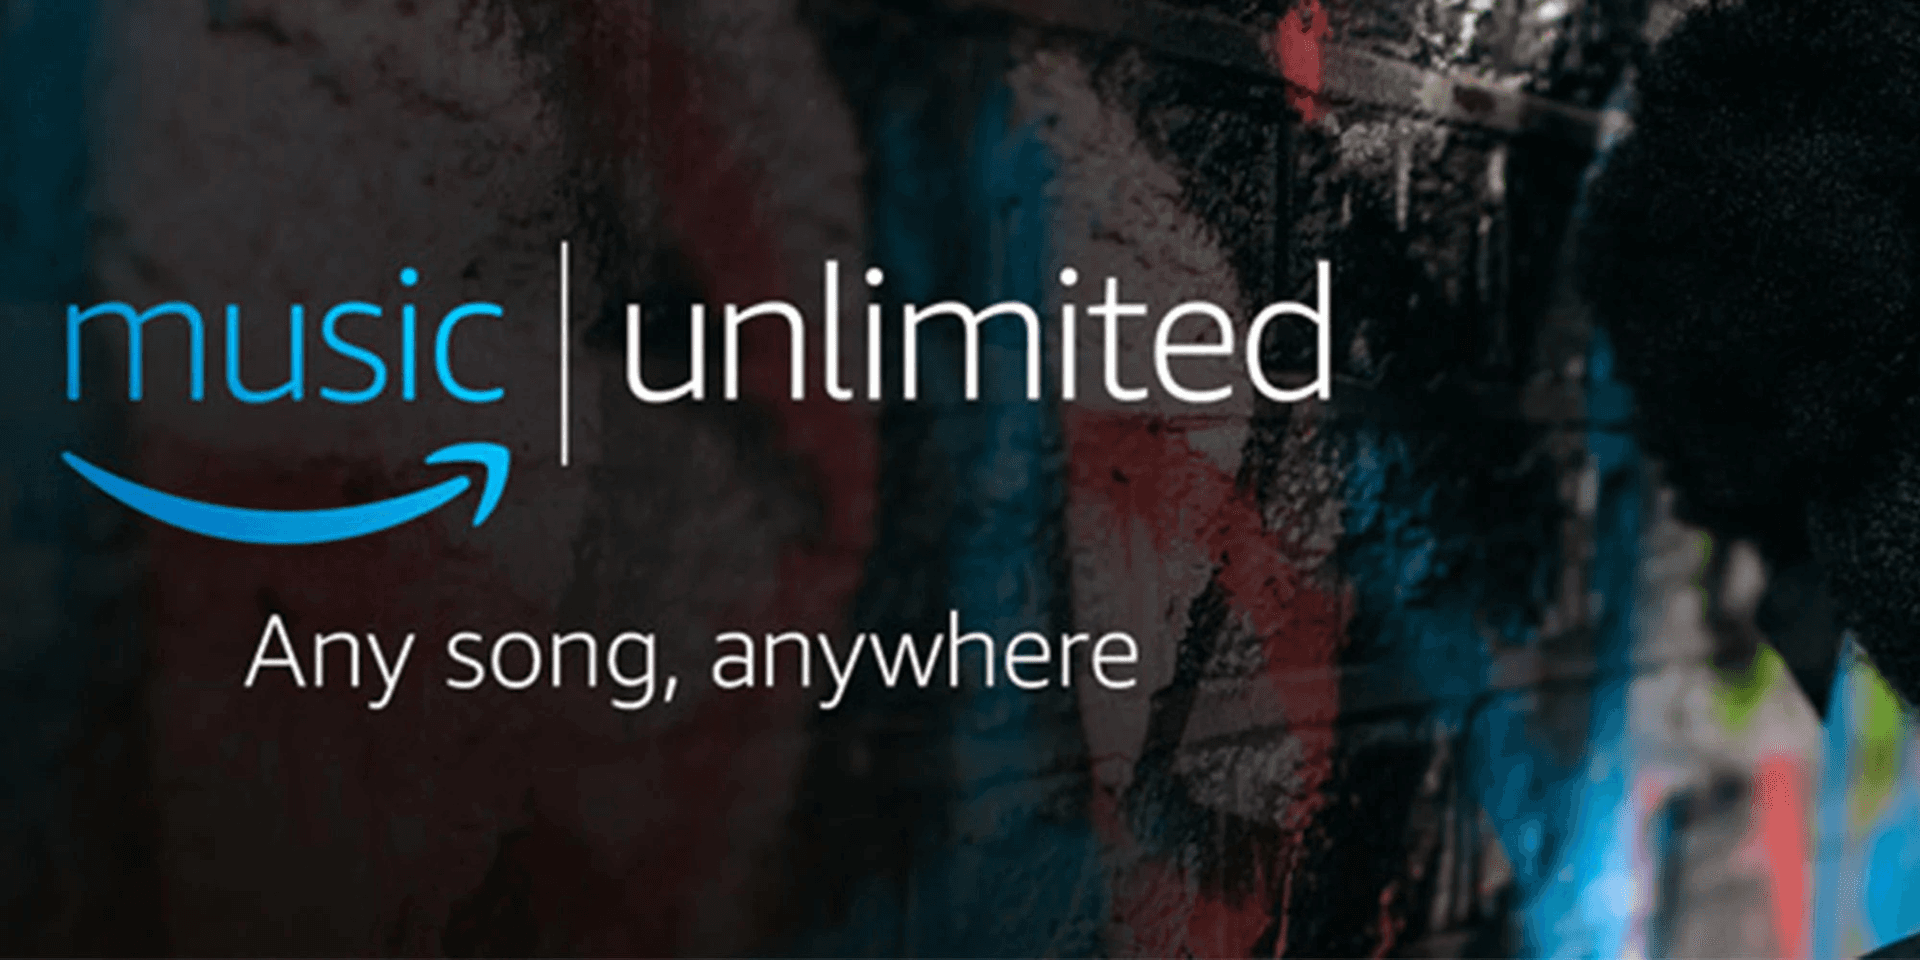 Amazon-Music-Unlimited